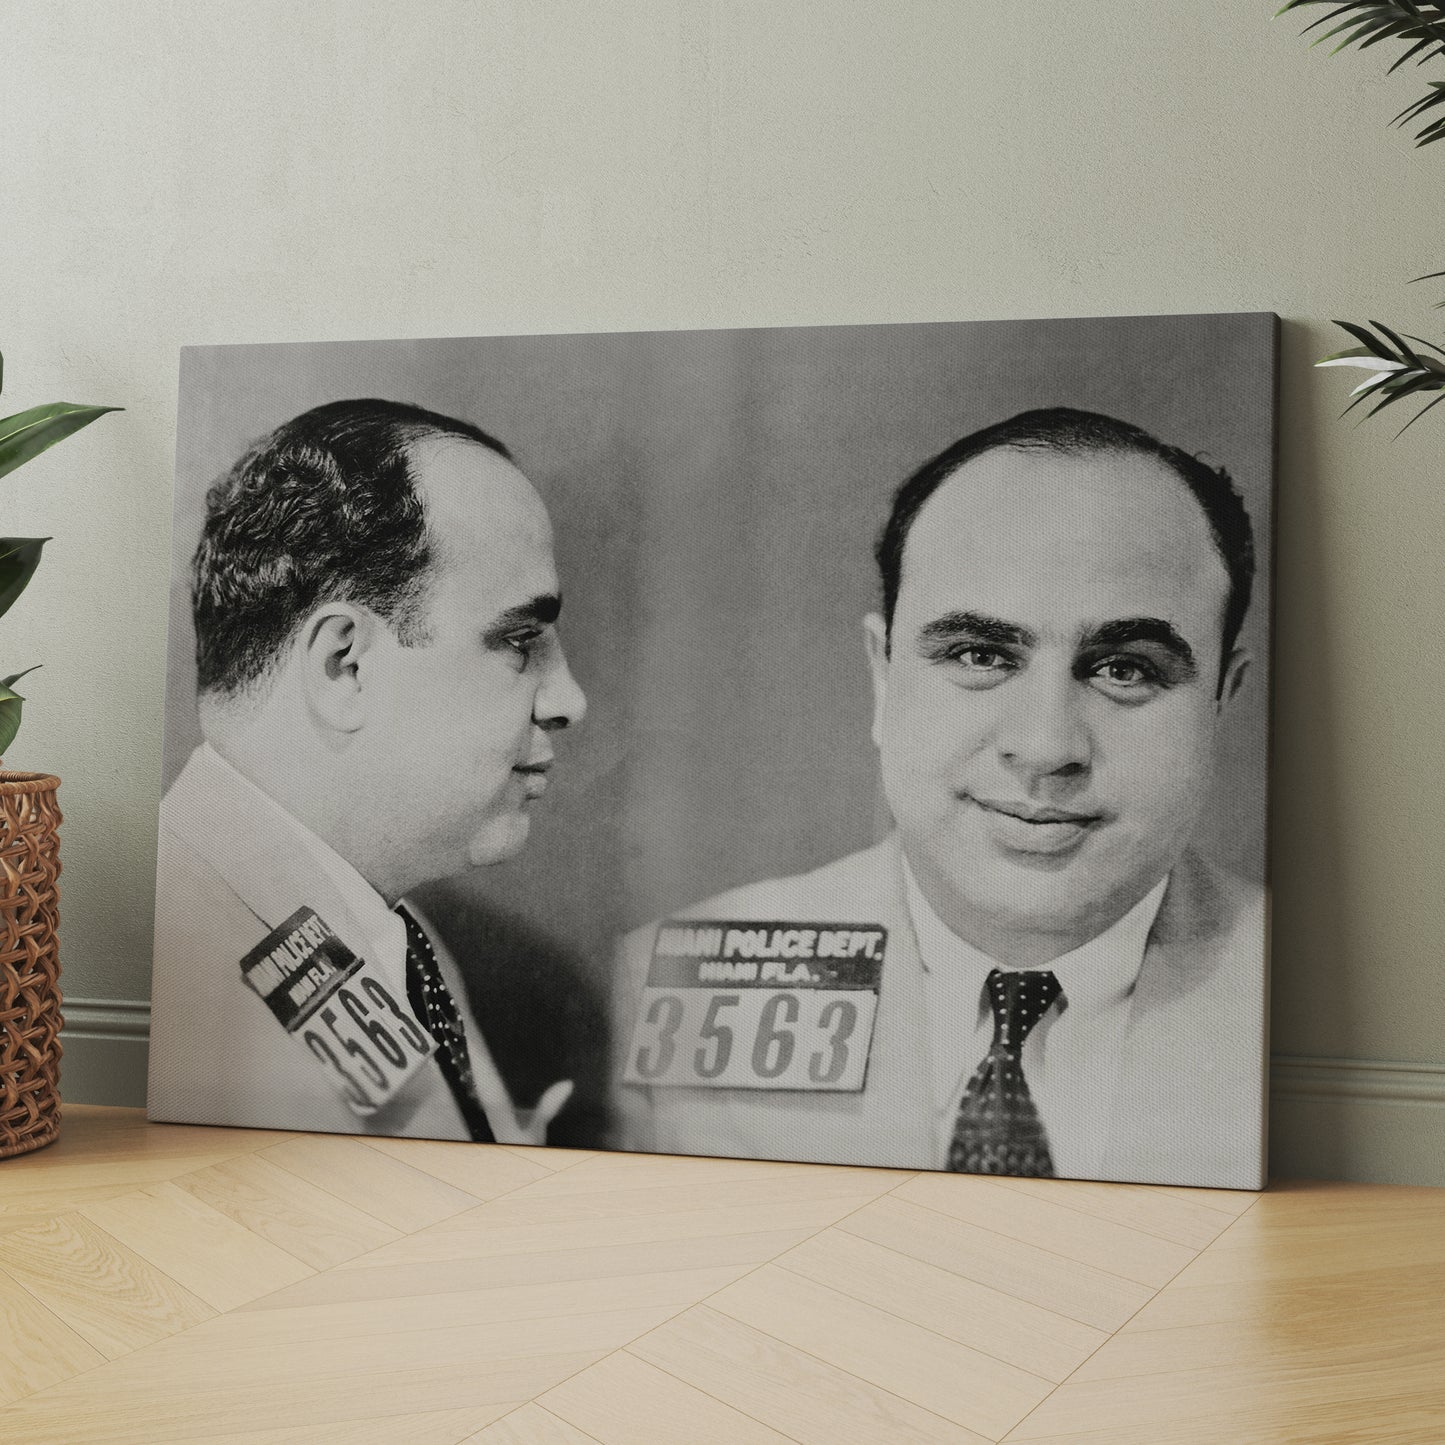 Al Capone 1931 Chicago Prison Mug Shot